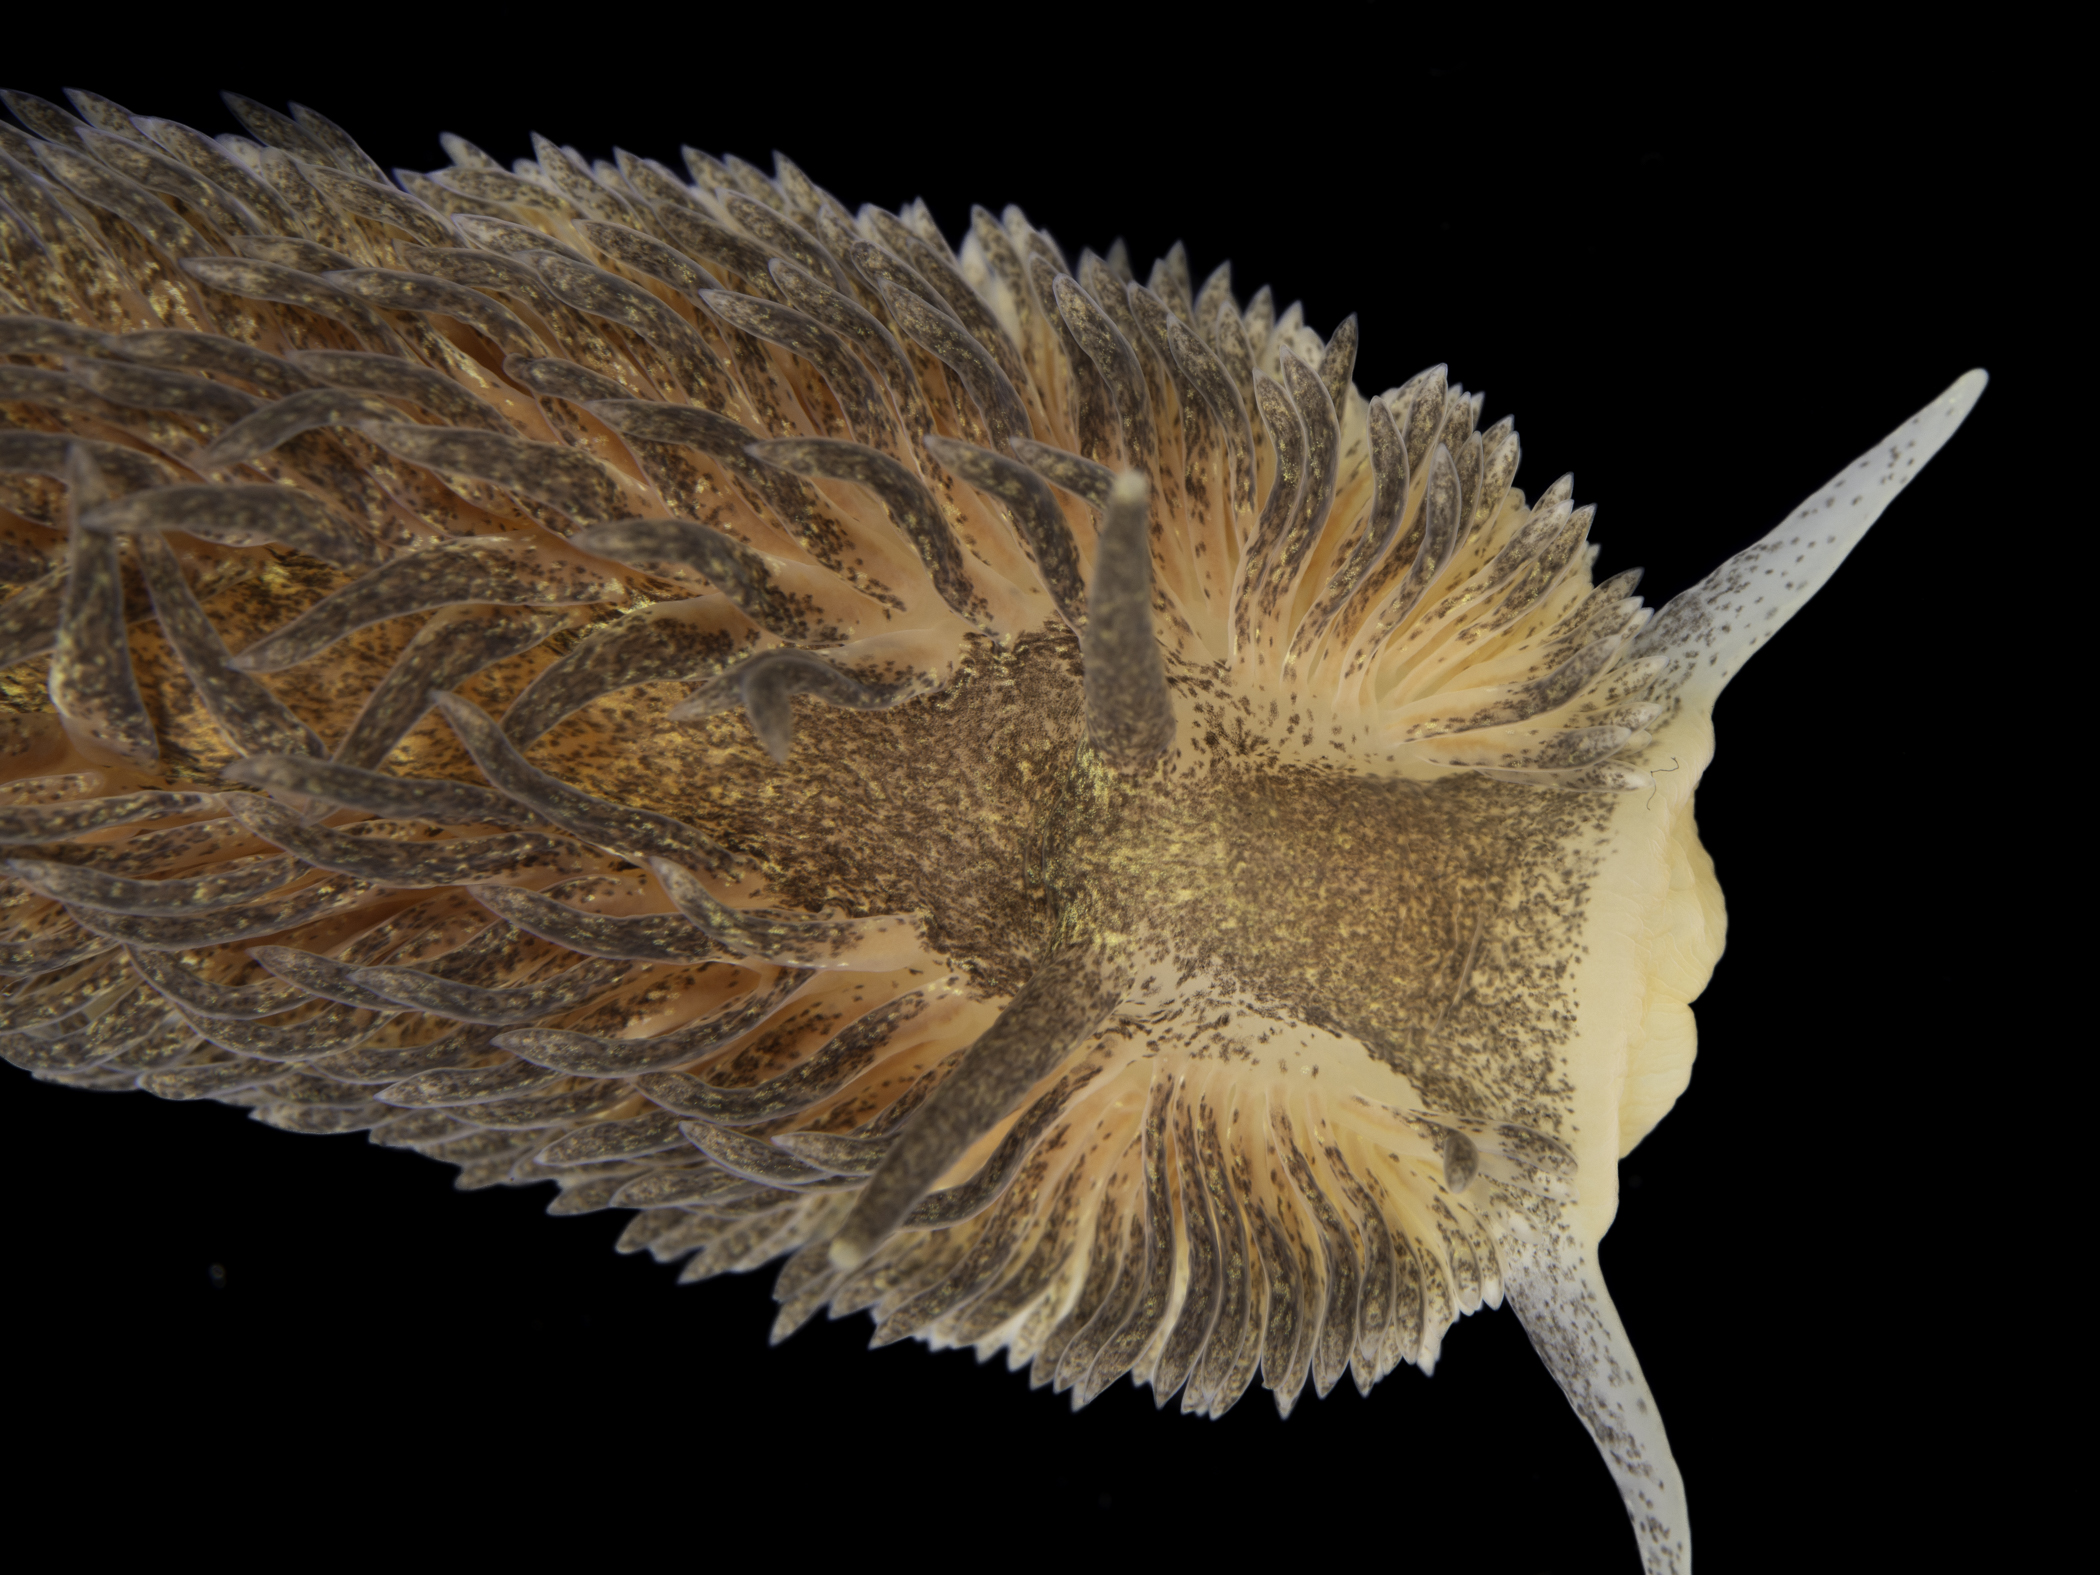 image: Aeolidia papillosa. Ballyhenry Island, Portaferry, Co. Down, Northern Ireland, intertidal, 2019-10-24.